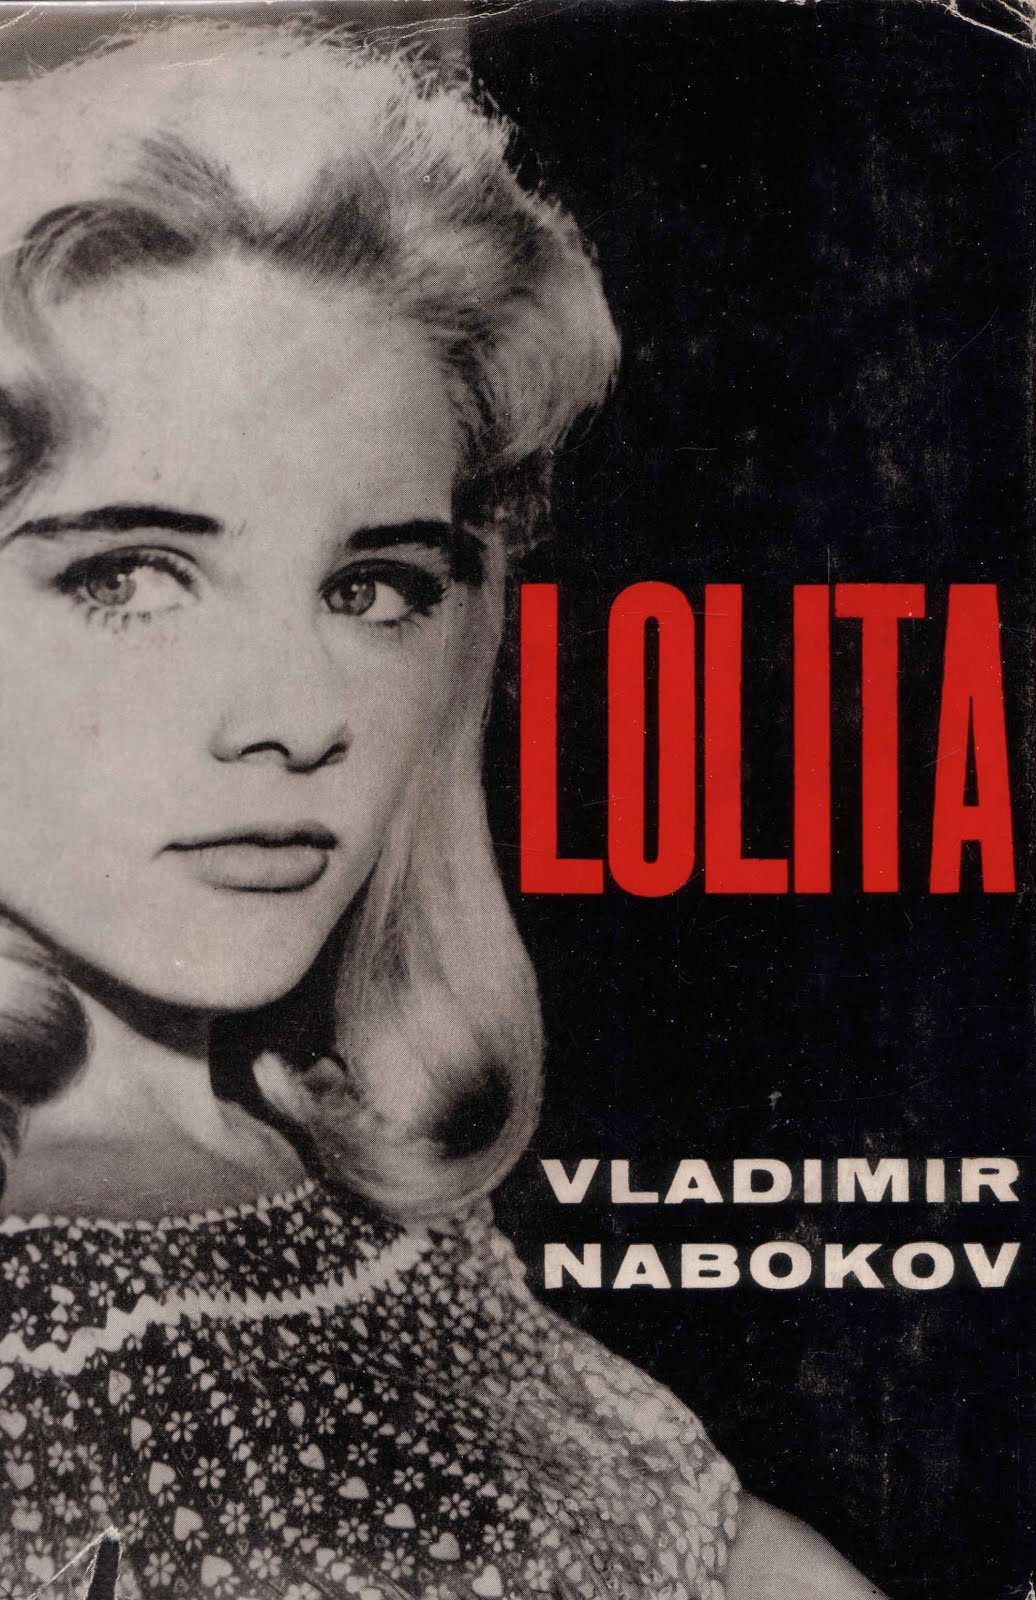 Humberts Description of Lolita in Vladimir Nabokovs